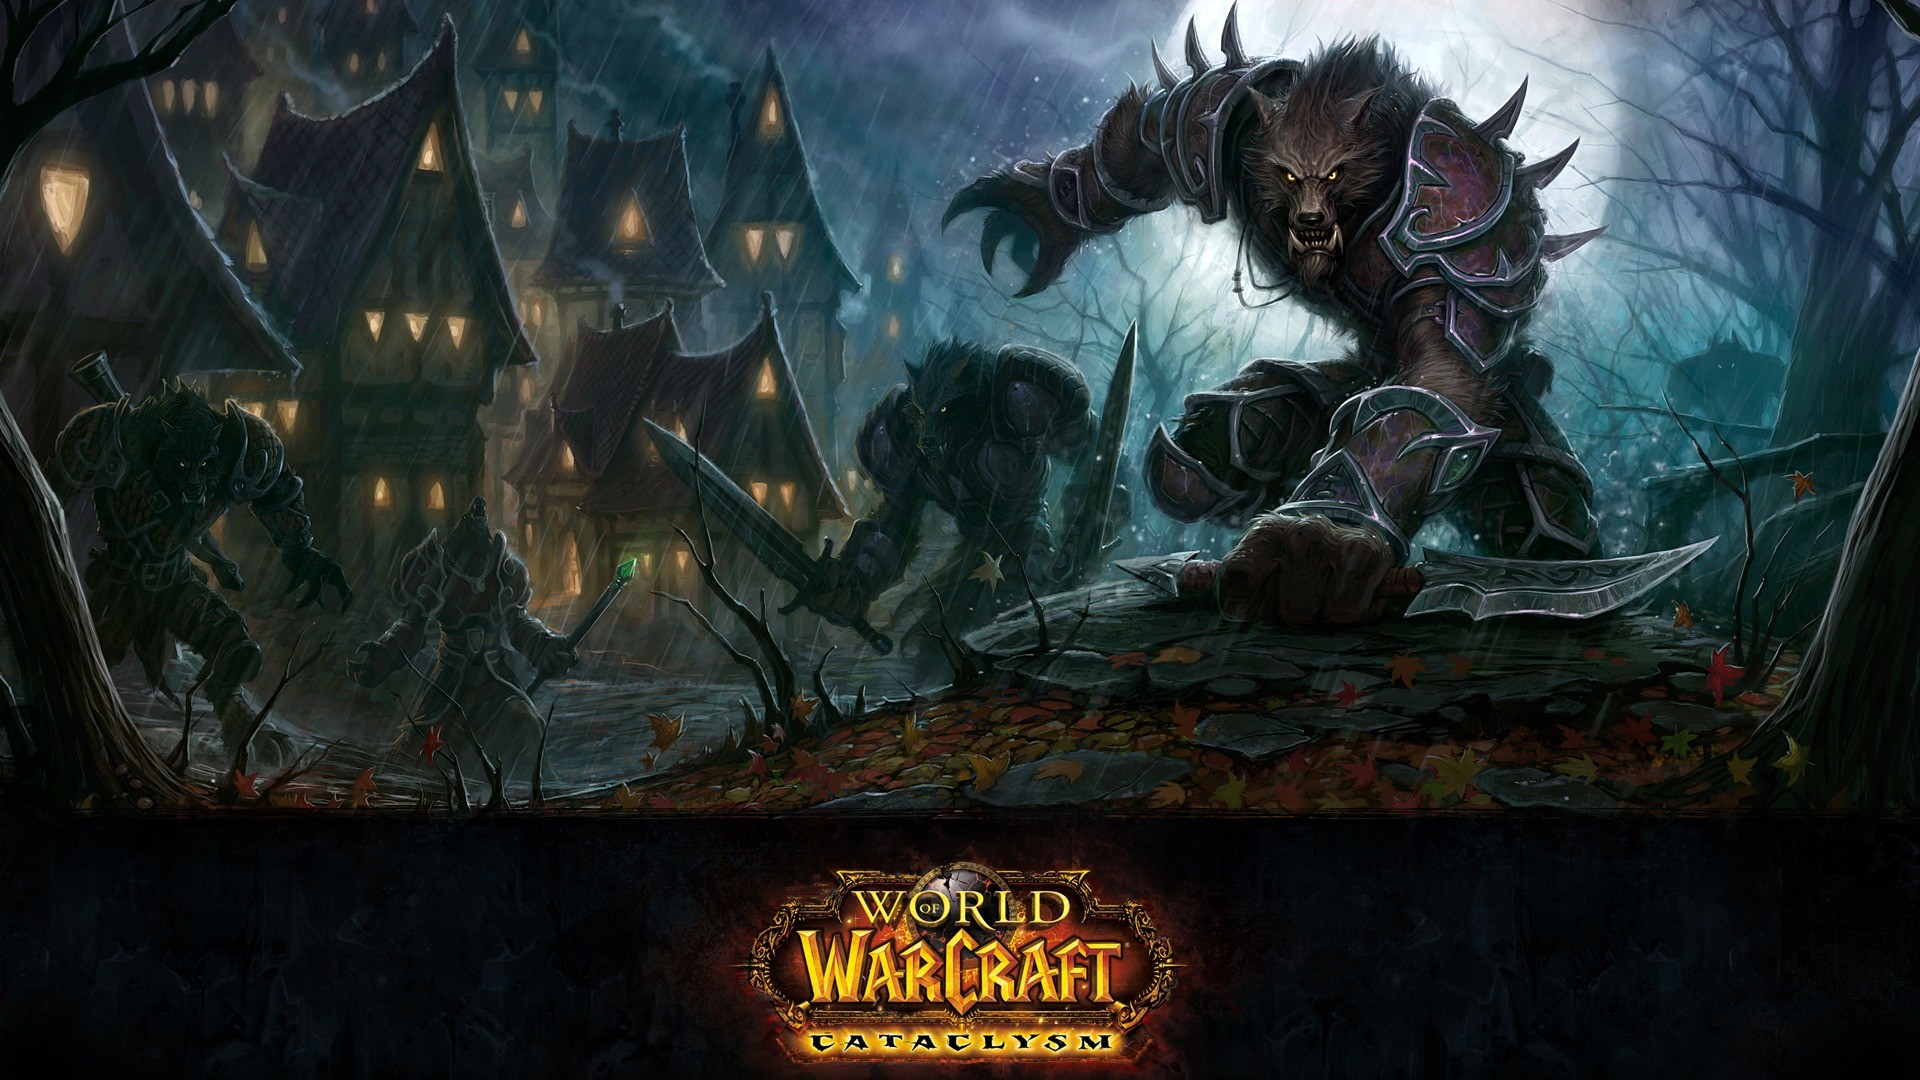 1920x1080 World of Warcraft Cataclysm Wallpaper World of Warcraft Games Wallpapers